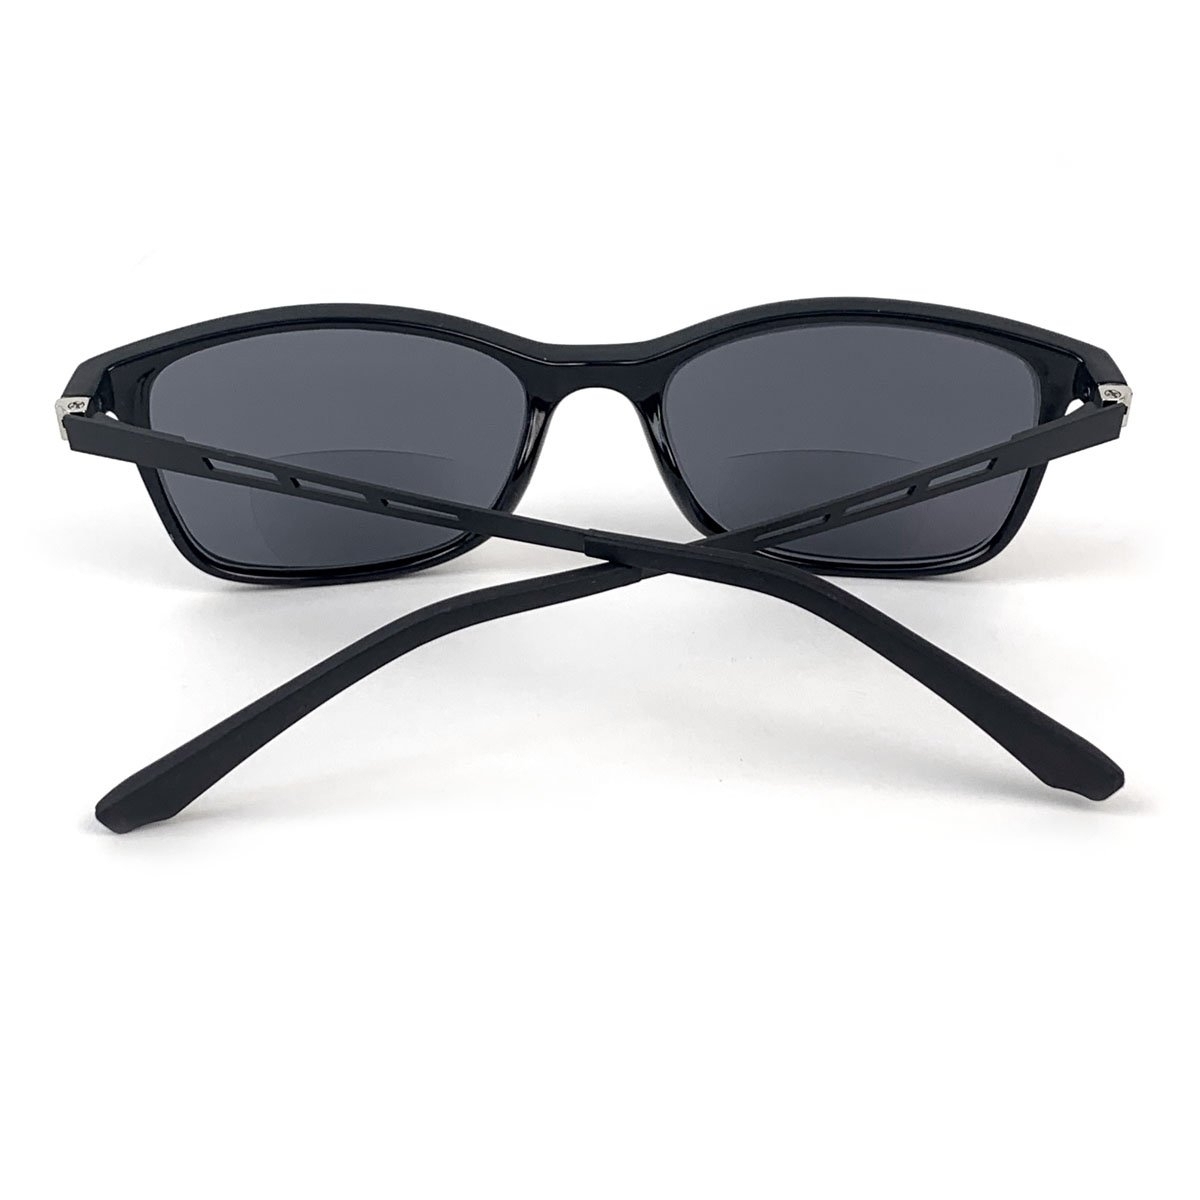 Bifocal Sun Readers Classic Frame Geek Retro Style Reading Sunglasses - Black, +1.50